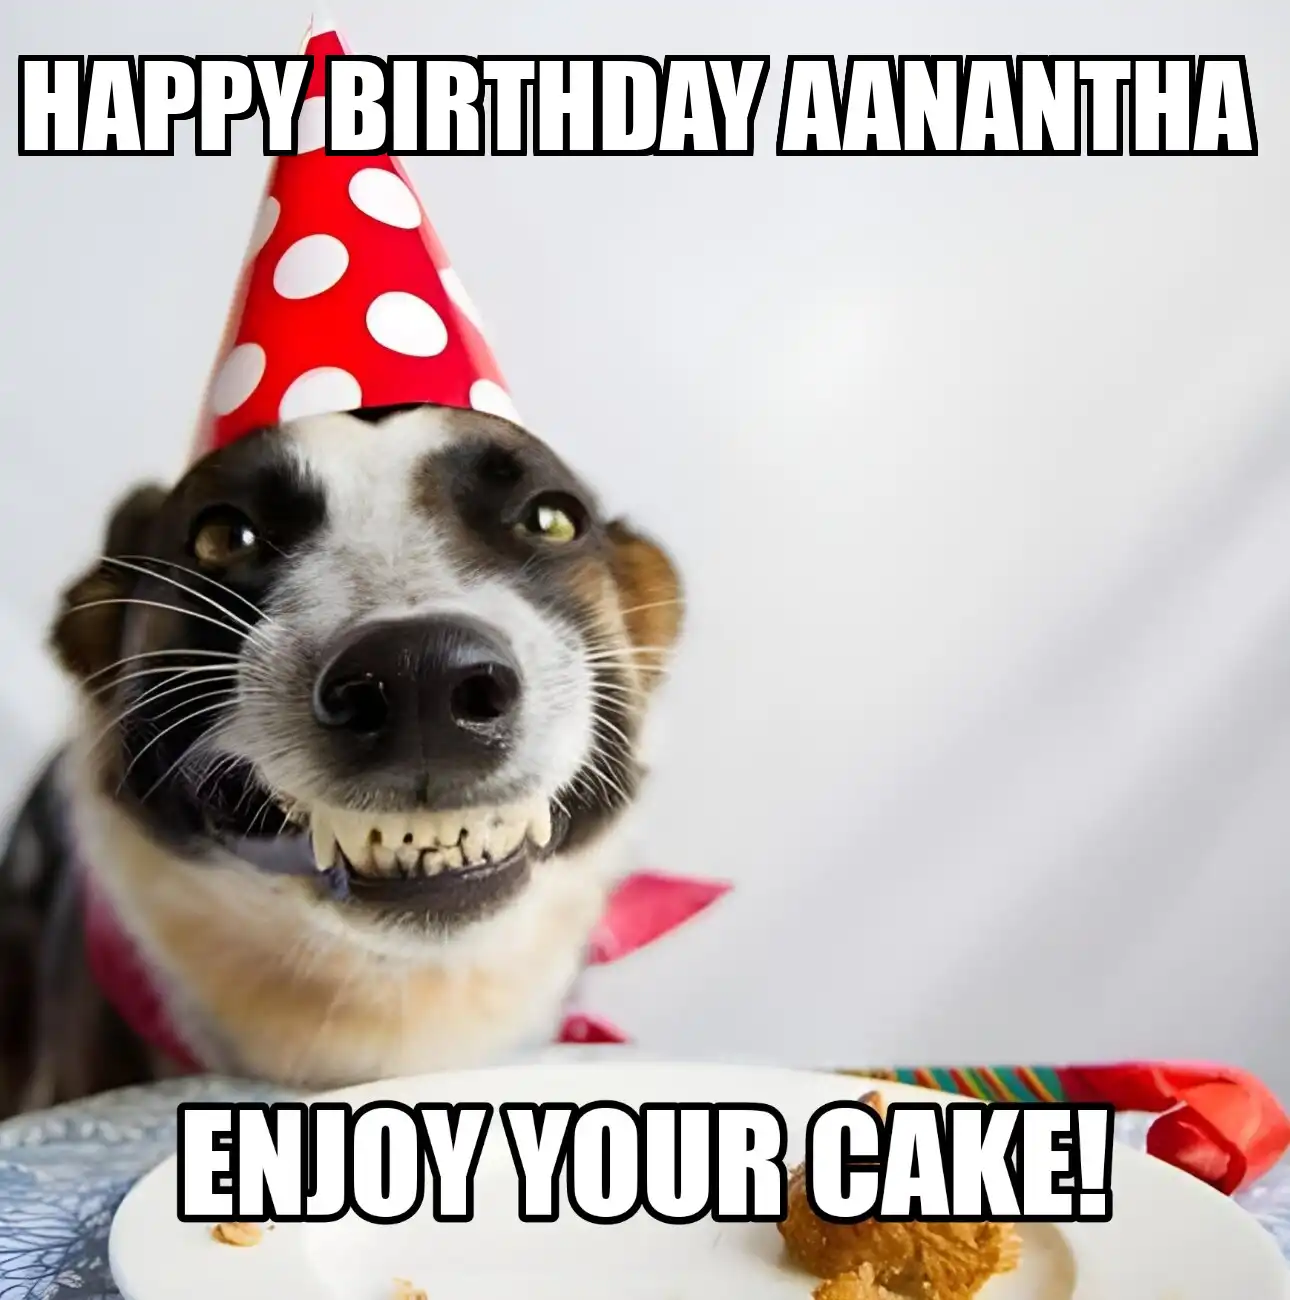 Happy Birthday Aanantha Enjoy Your Cake Dog Meme